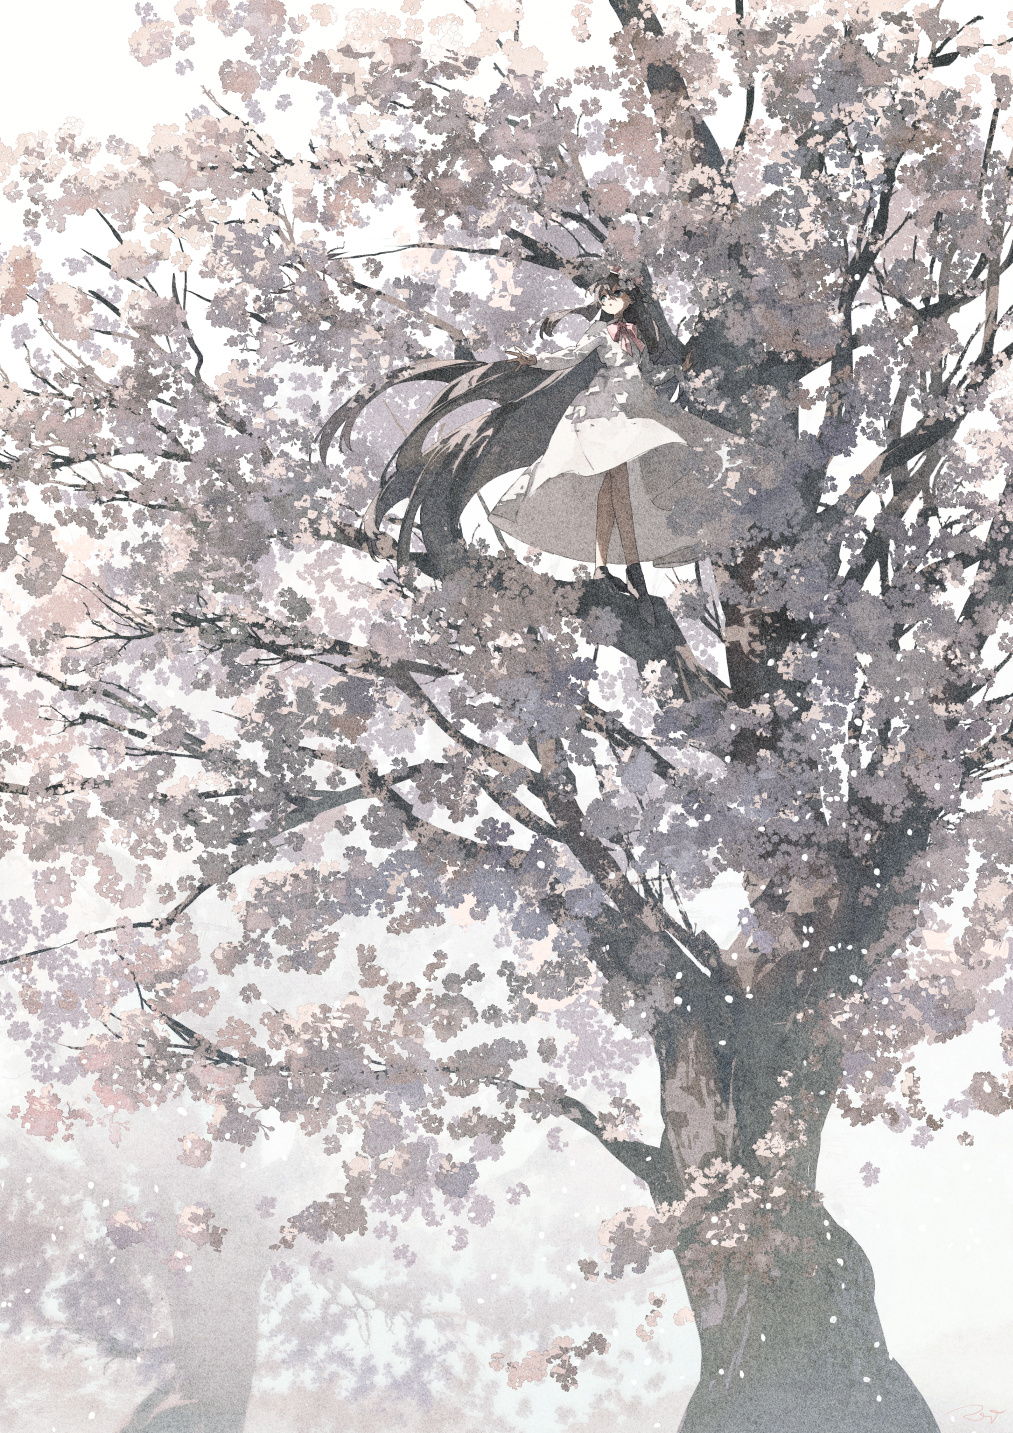 Anime 1013x1433 anime anime girls portrait display dress trees branch flowers looking away standing long hair bow tie flower in hair brunette blue eyes